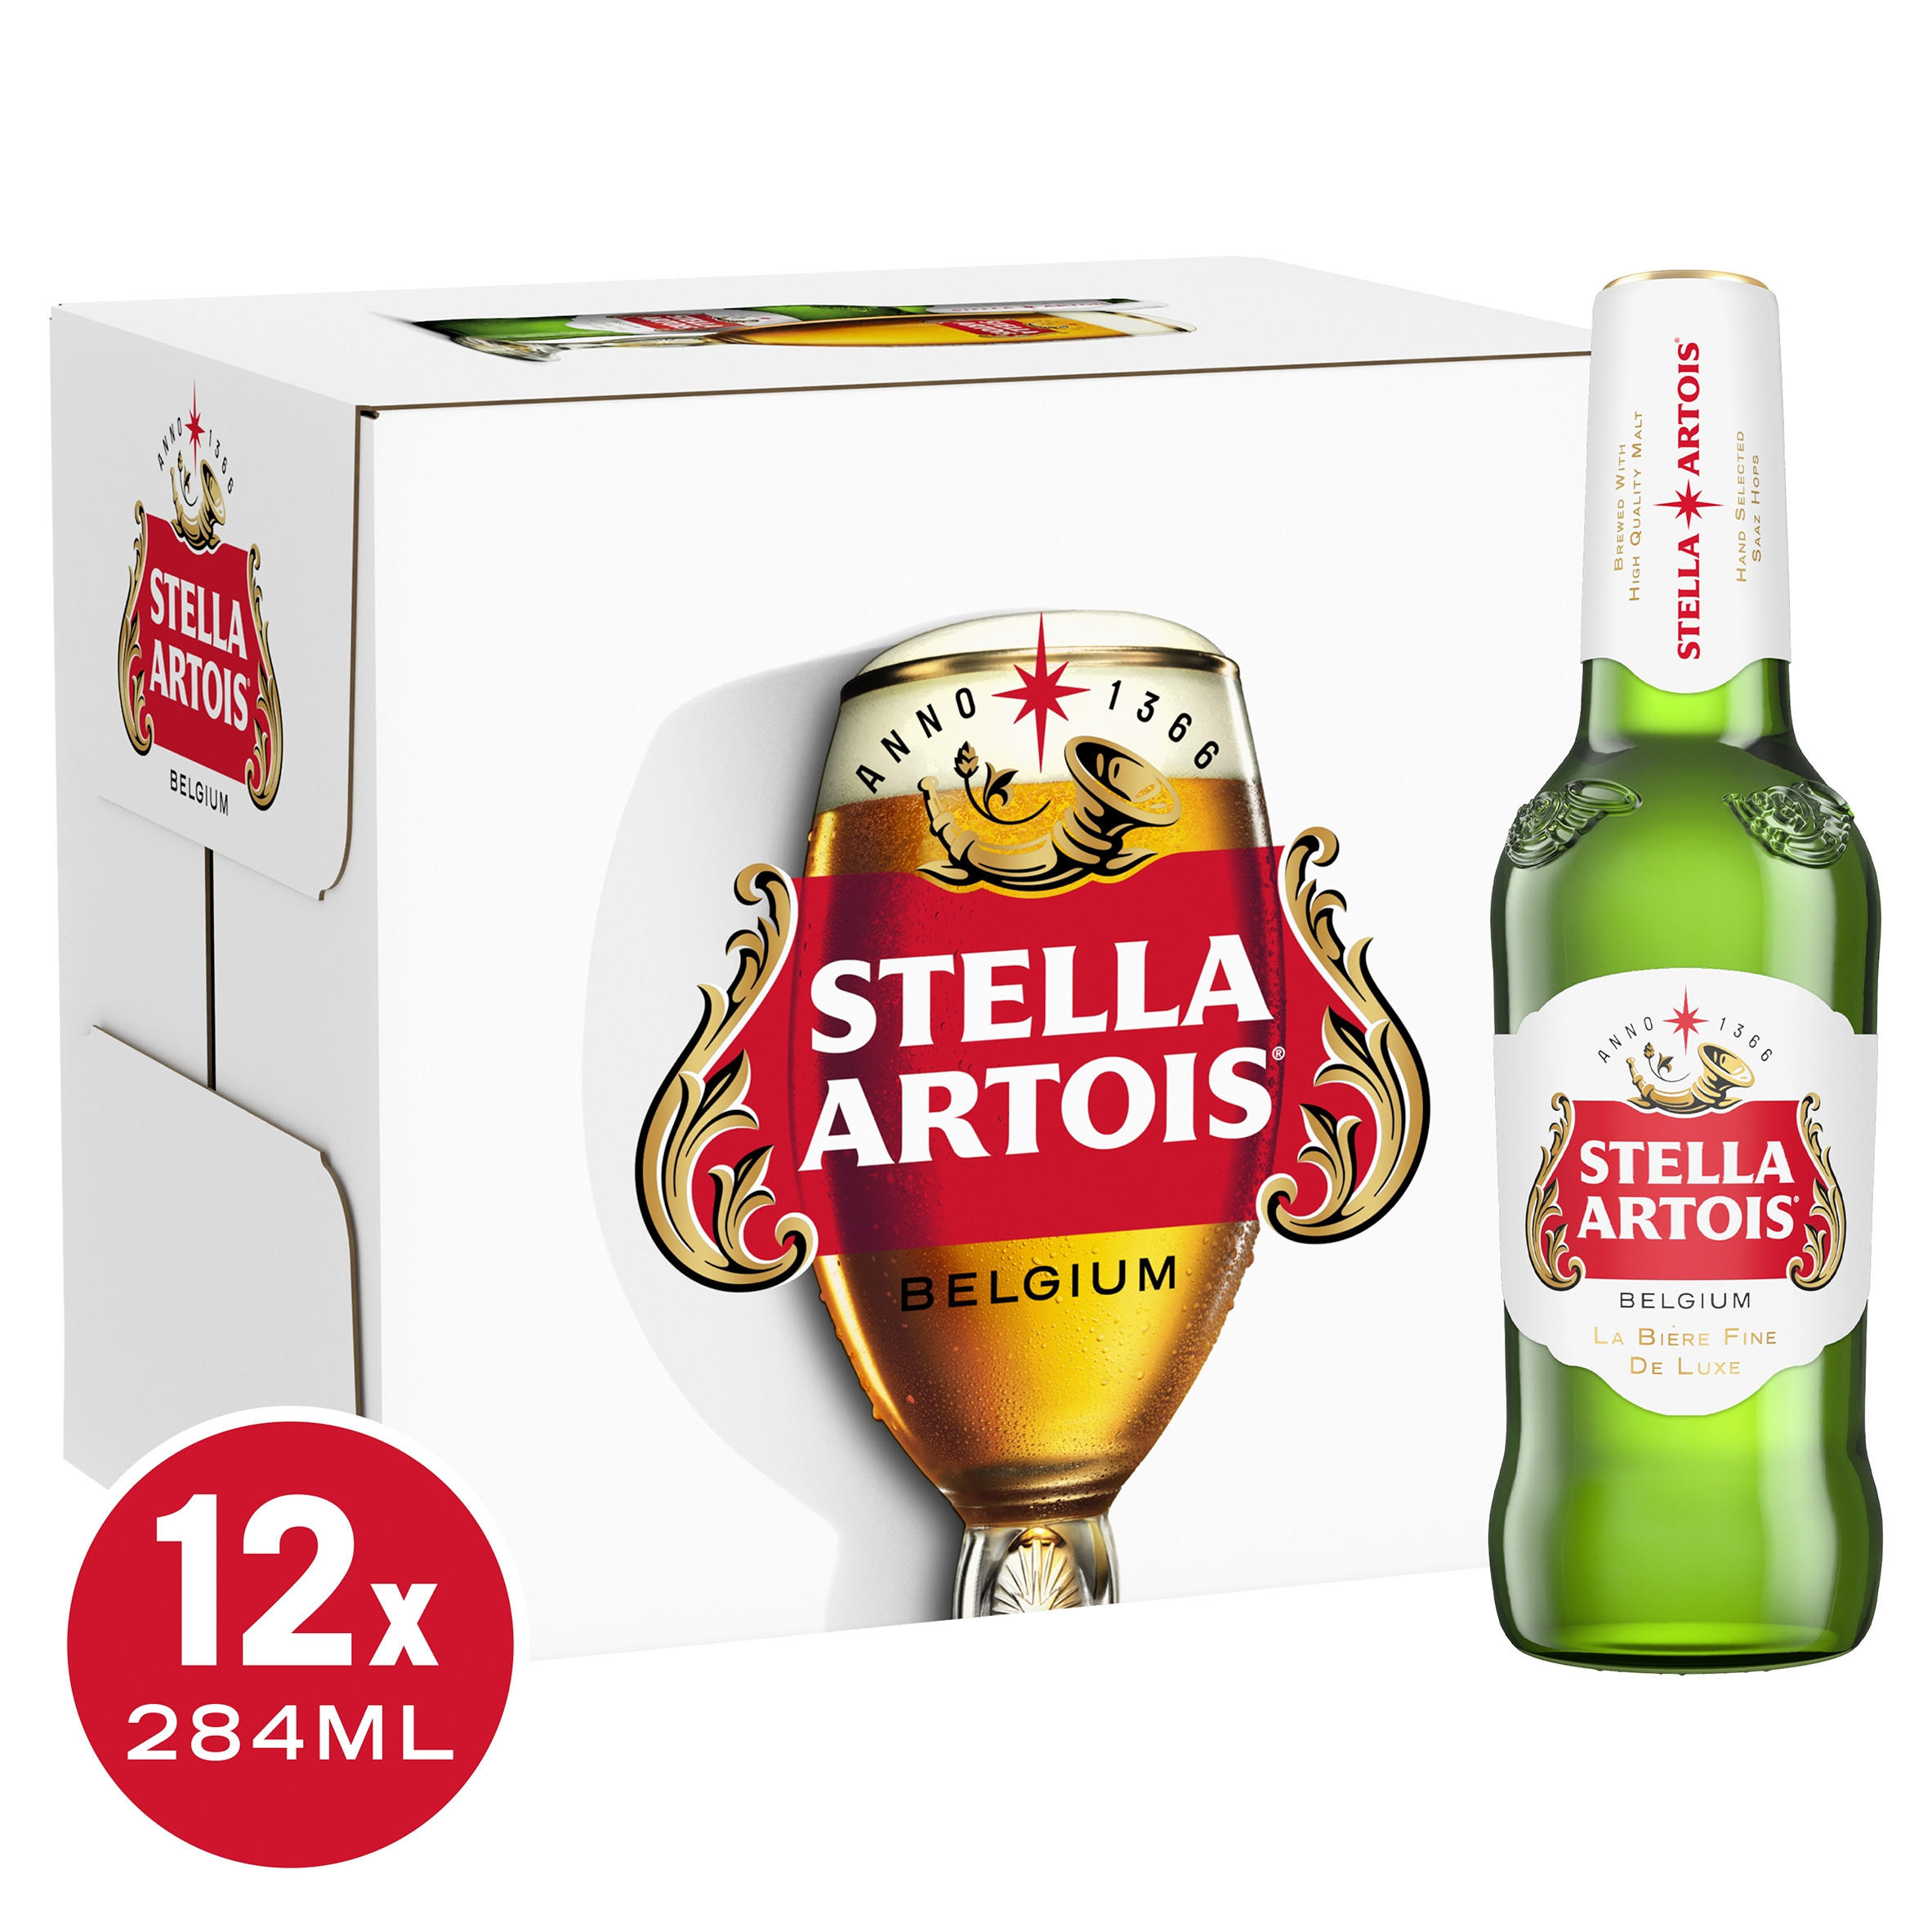 Stella Artois Belgium Premium Lager Beer 12 x 284ml | Beer, Cider ...